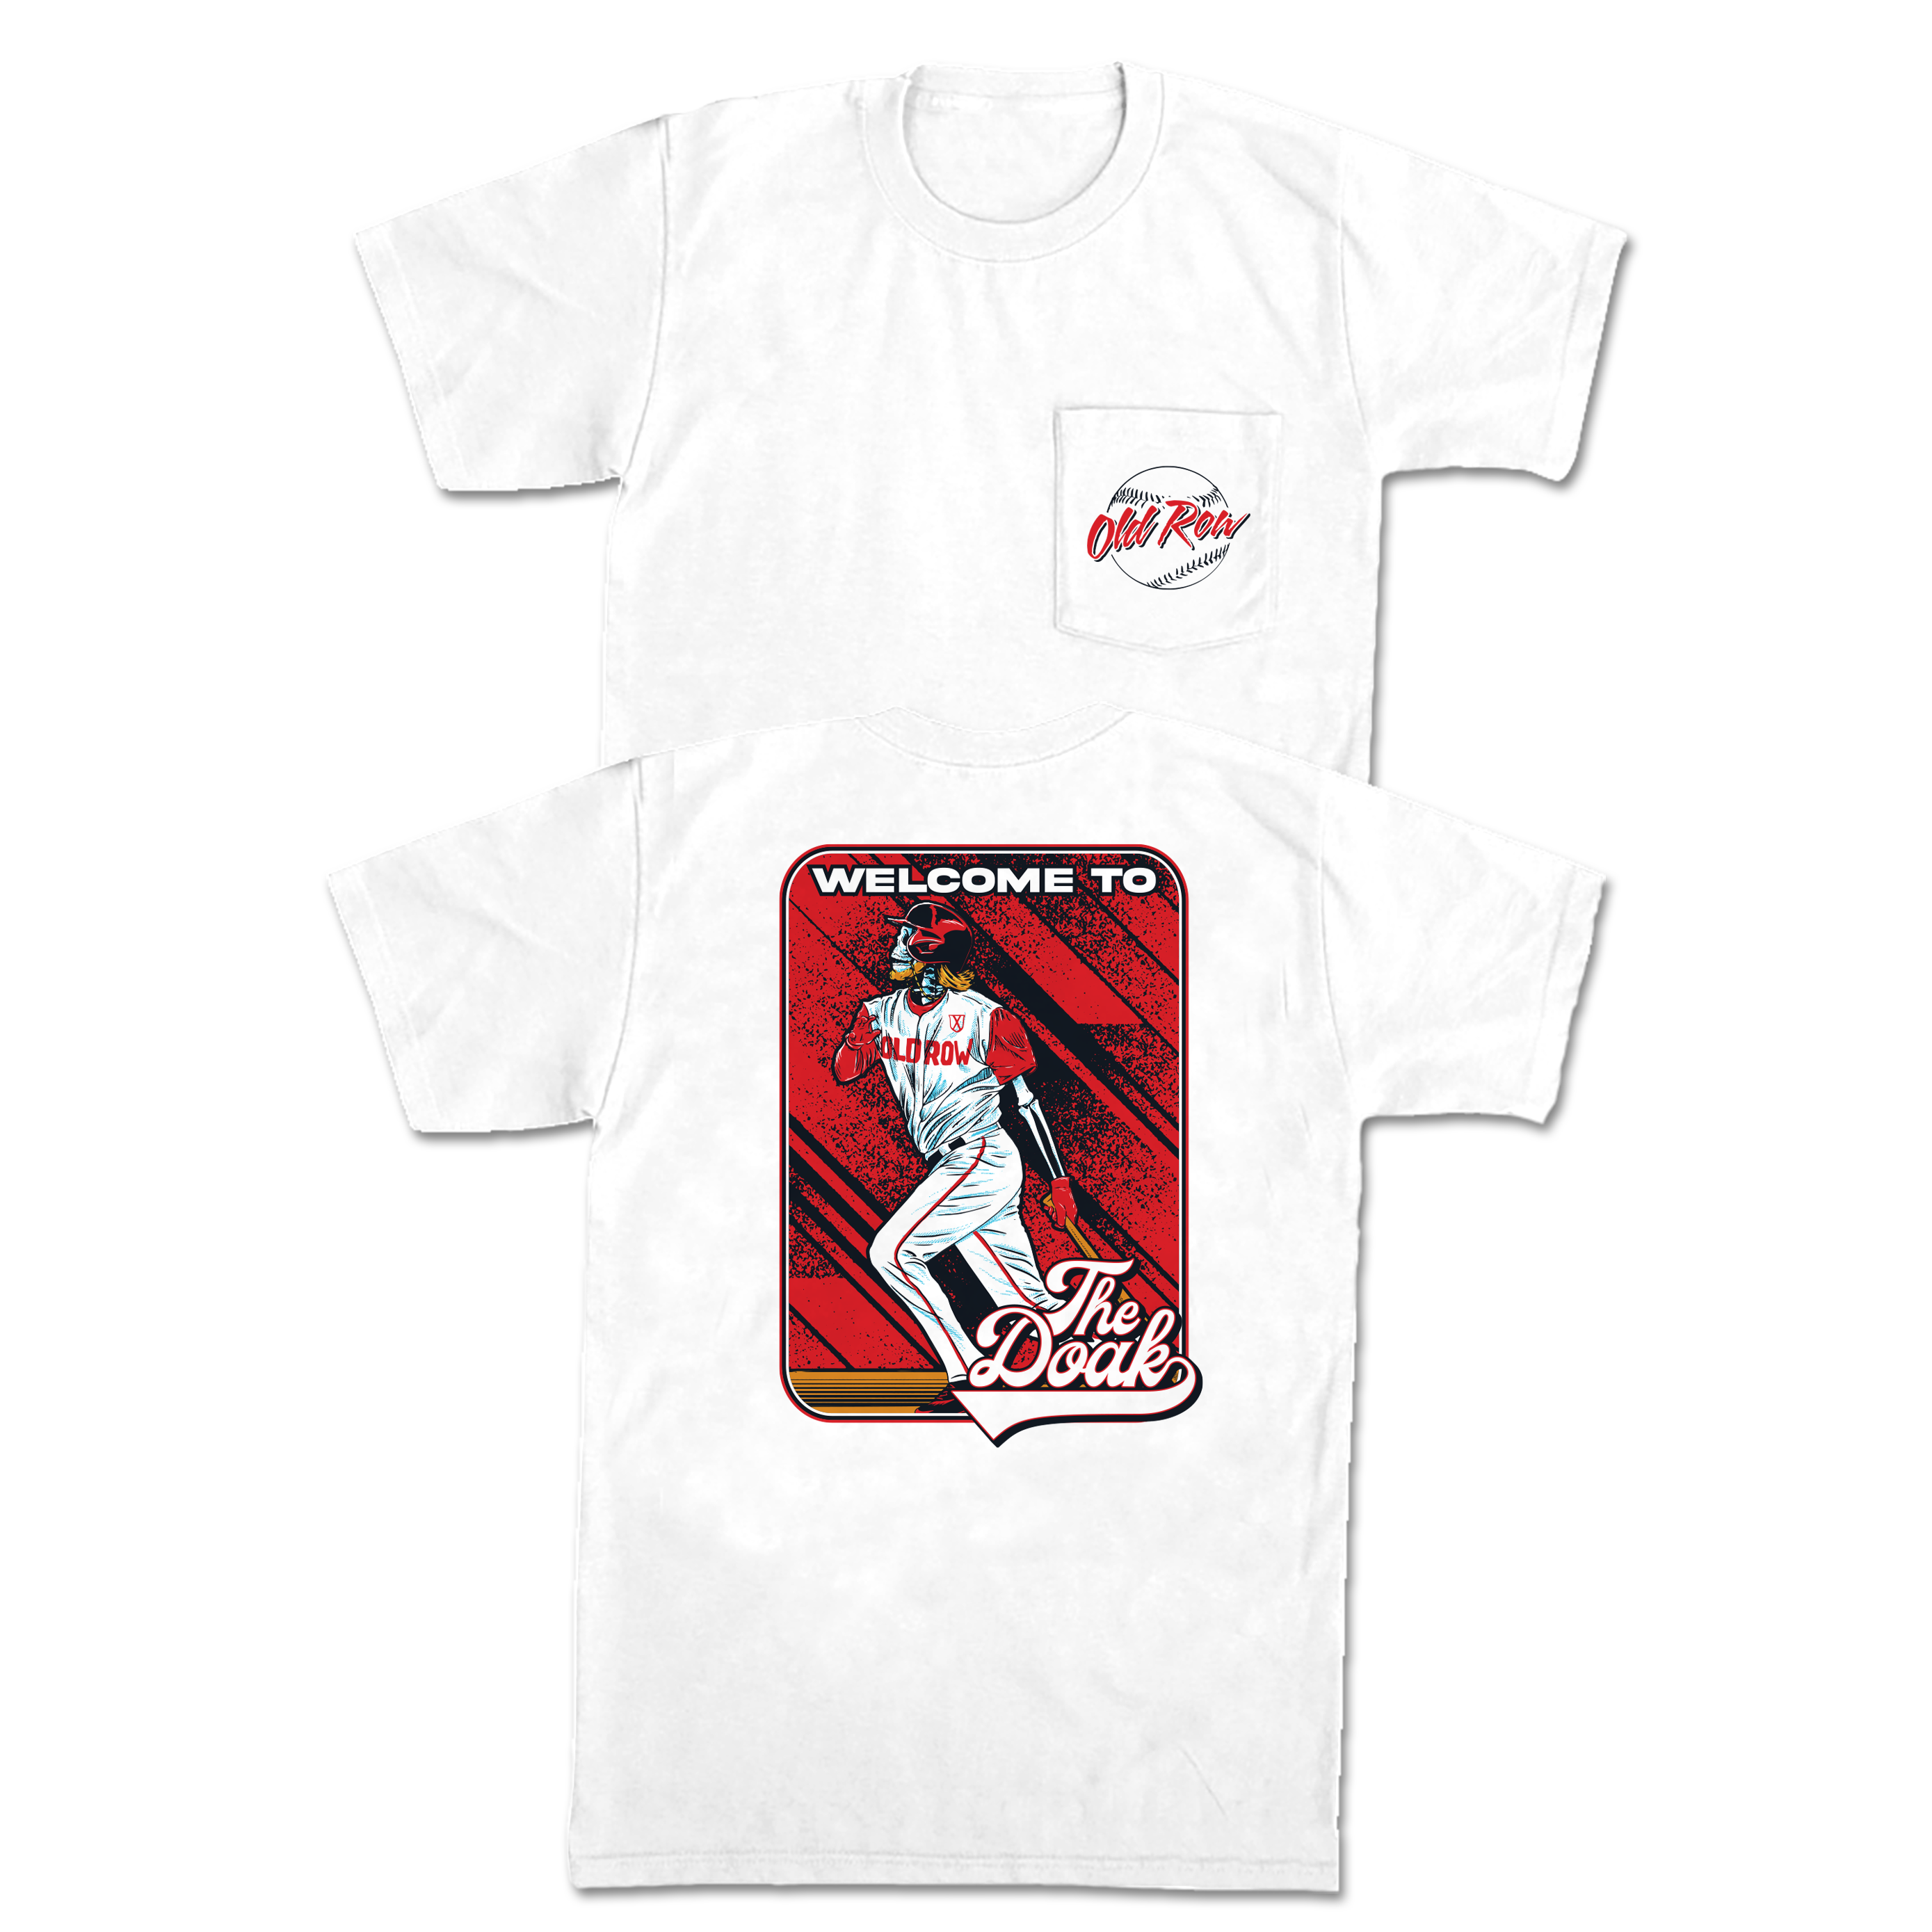 Vintage Sport Oakland Athletics Club Men's White T-Shirt-3XL